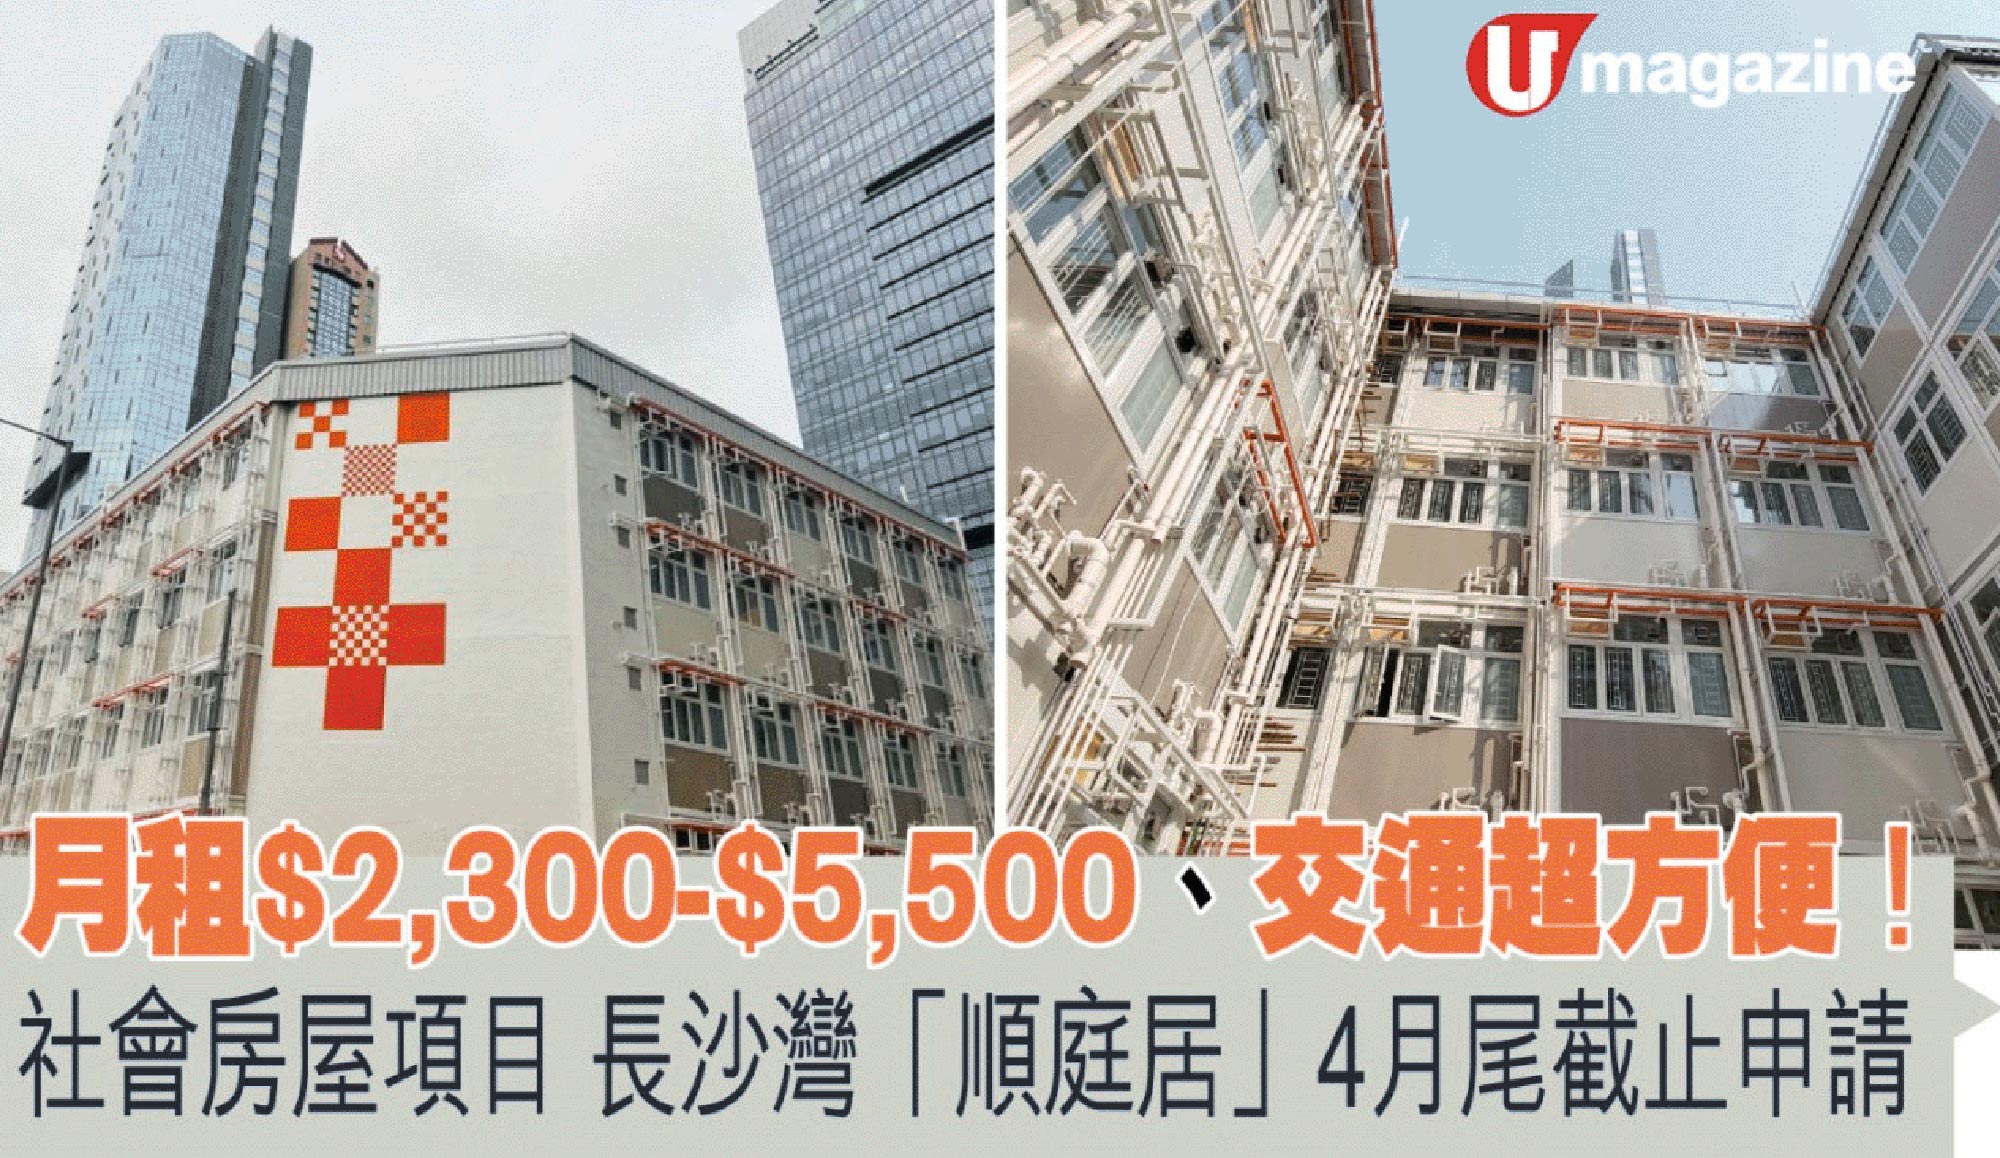 Cover Image - UMagazine - Social Housing Project - Cheung Sha Wan “Shun Ting Terraced Home”